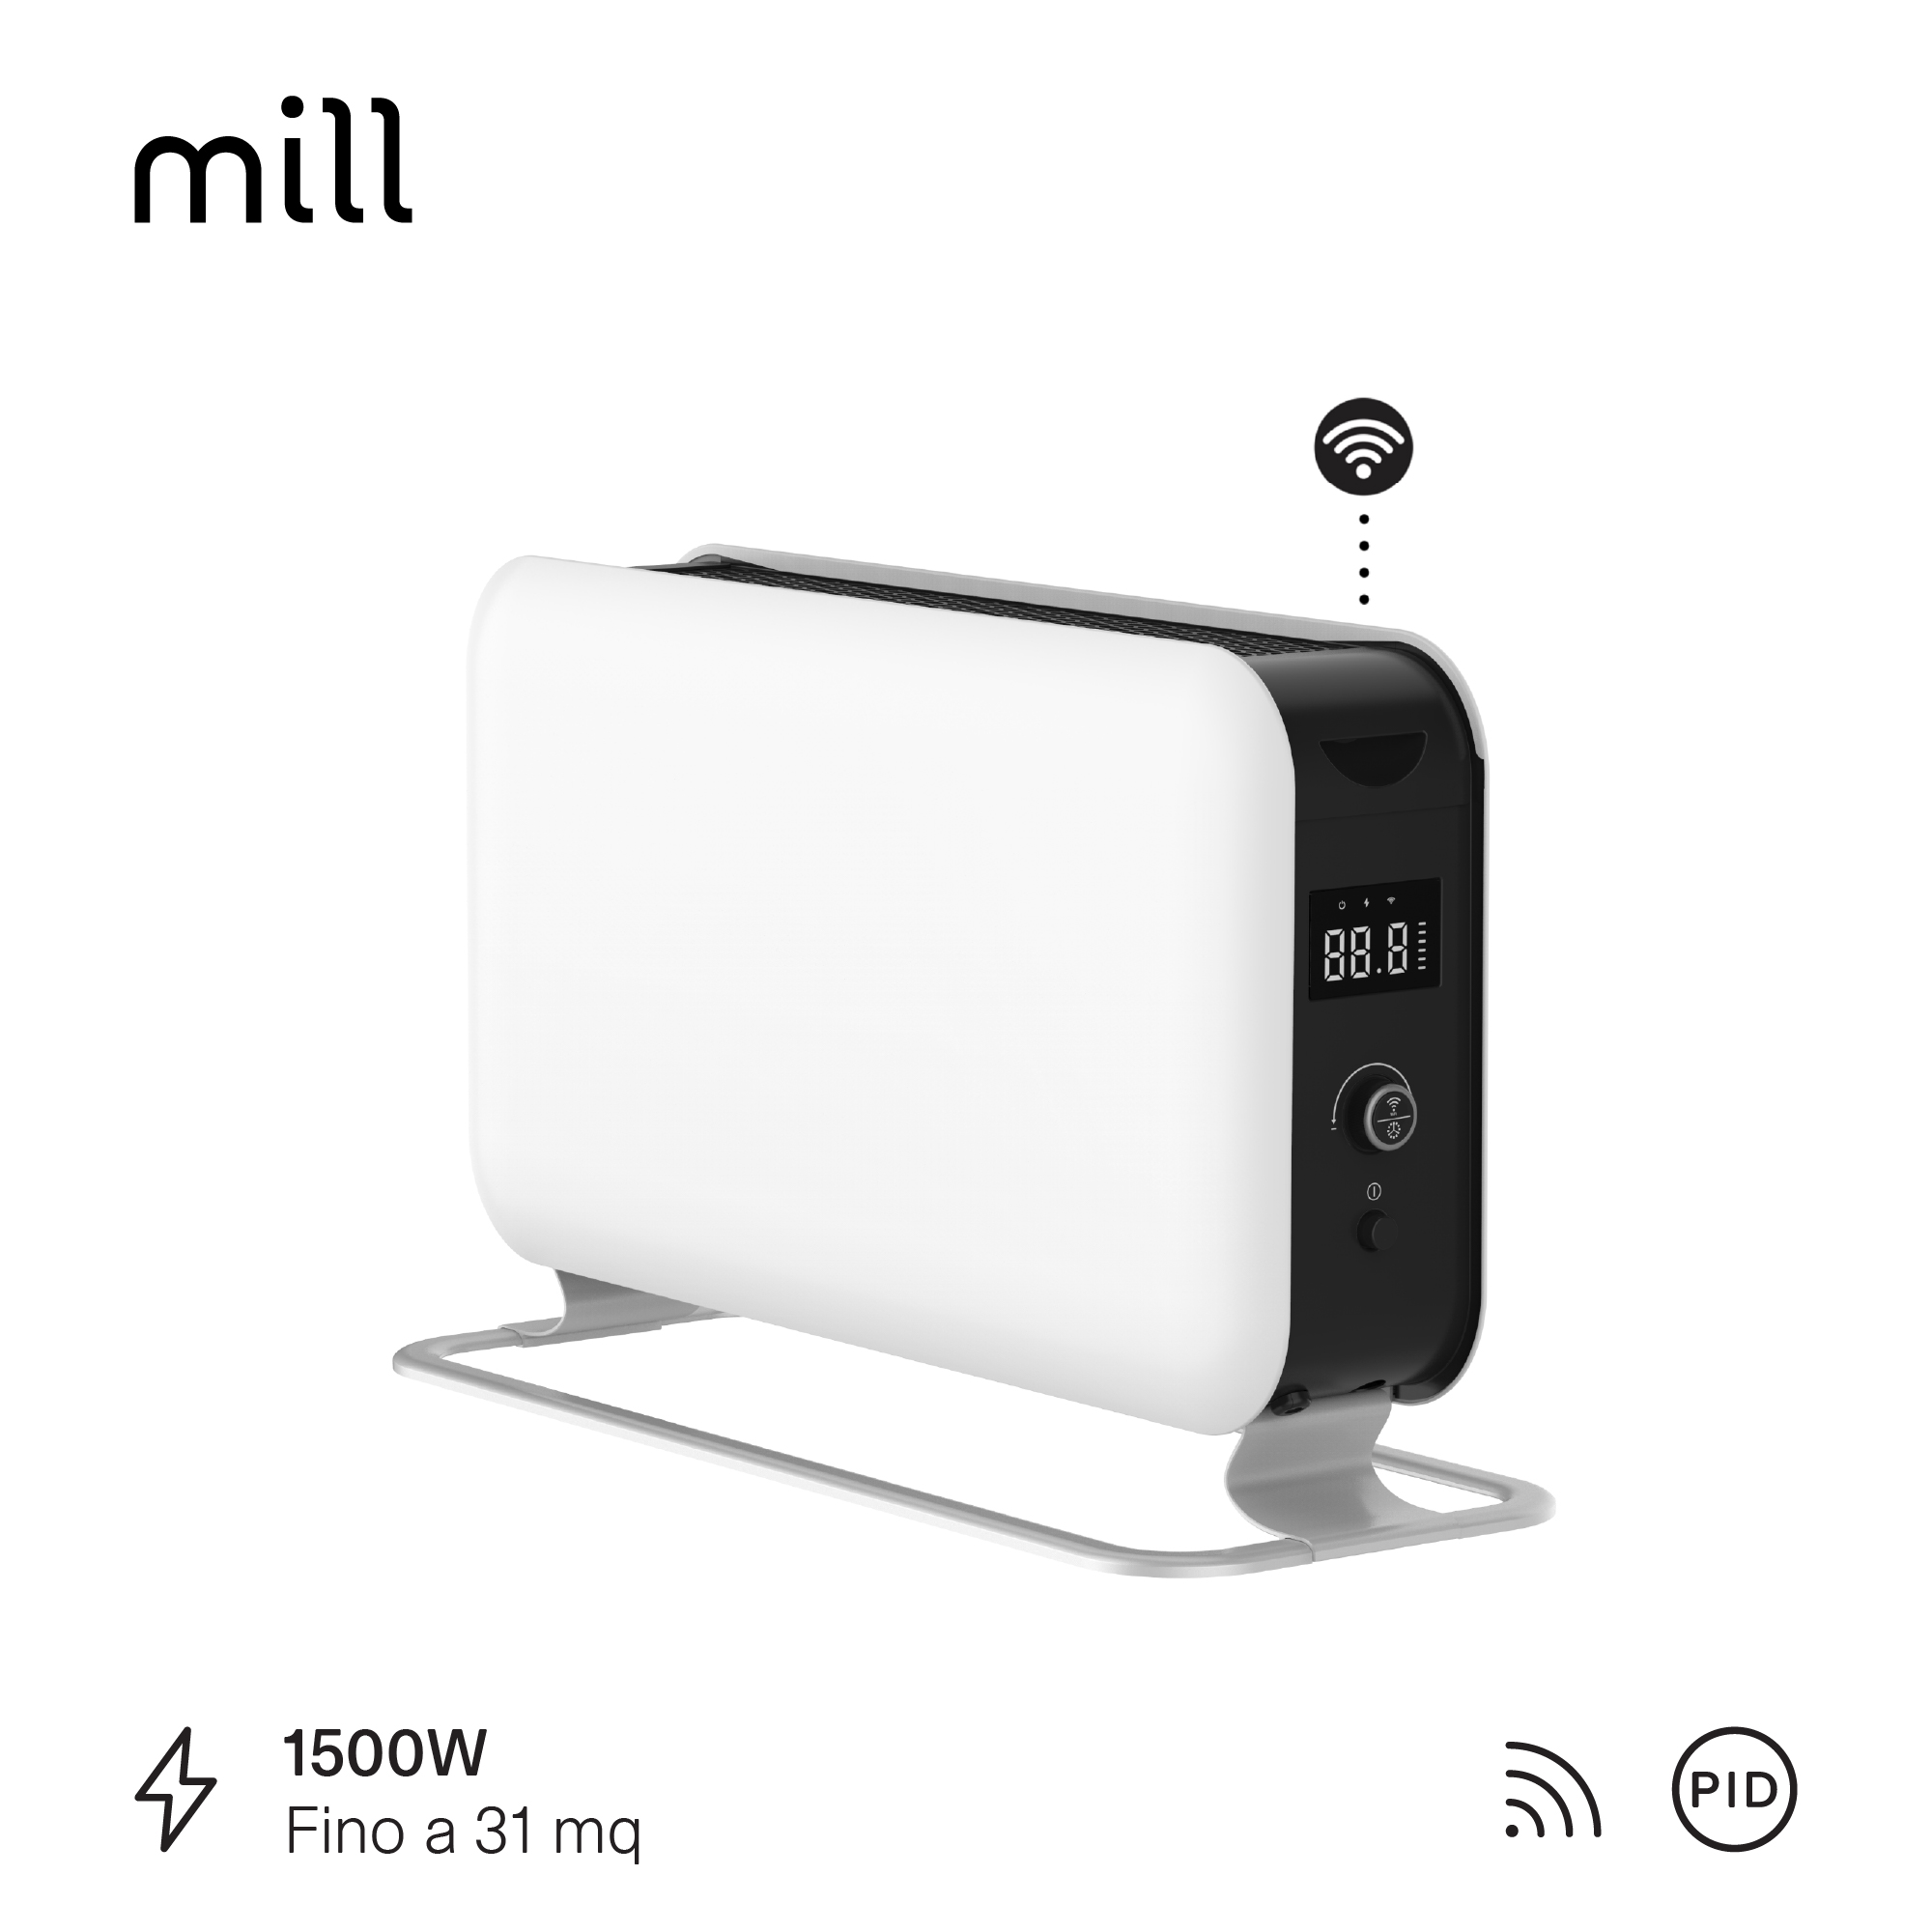 Termoconvettore Portatile Mill WiFi Max 1500W - Mill Heat